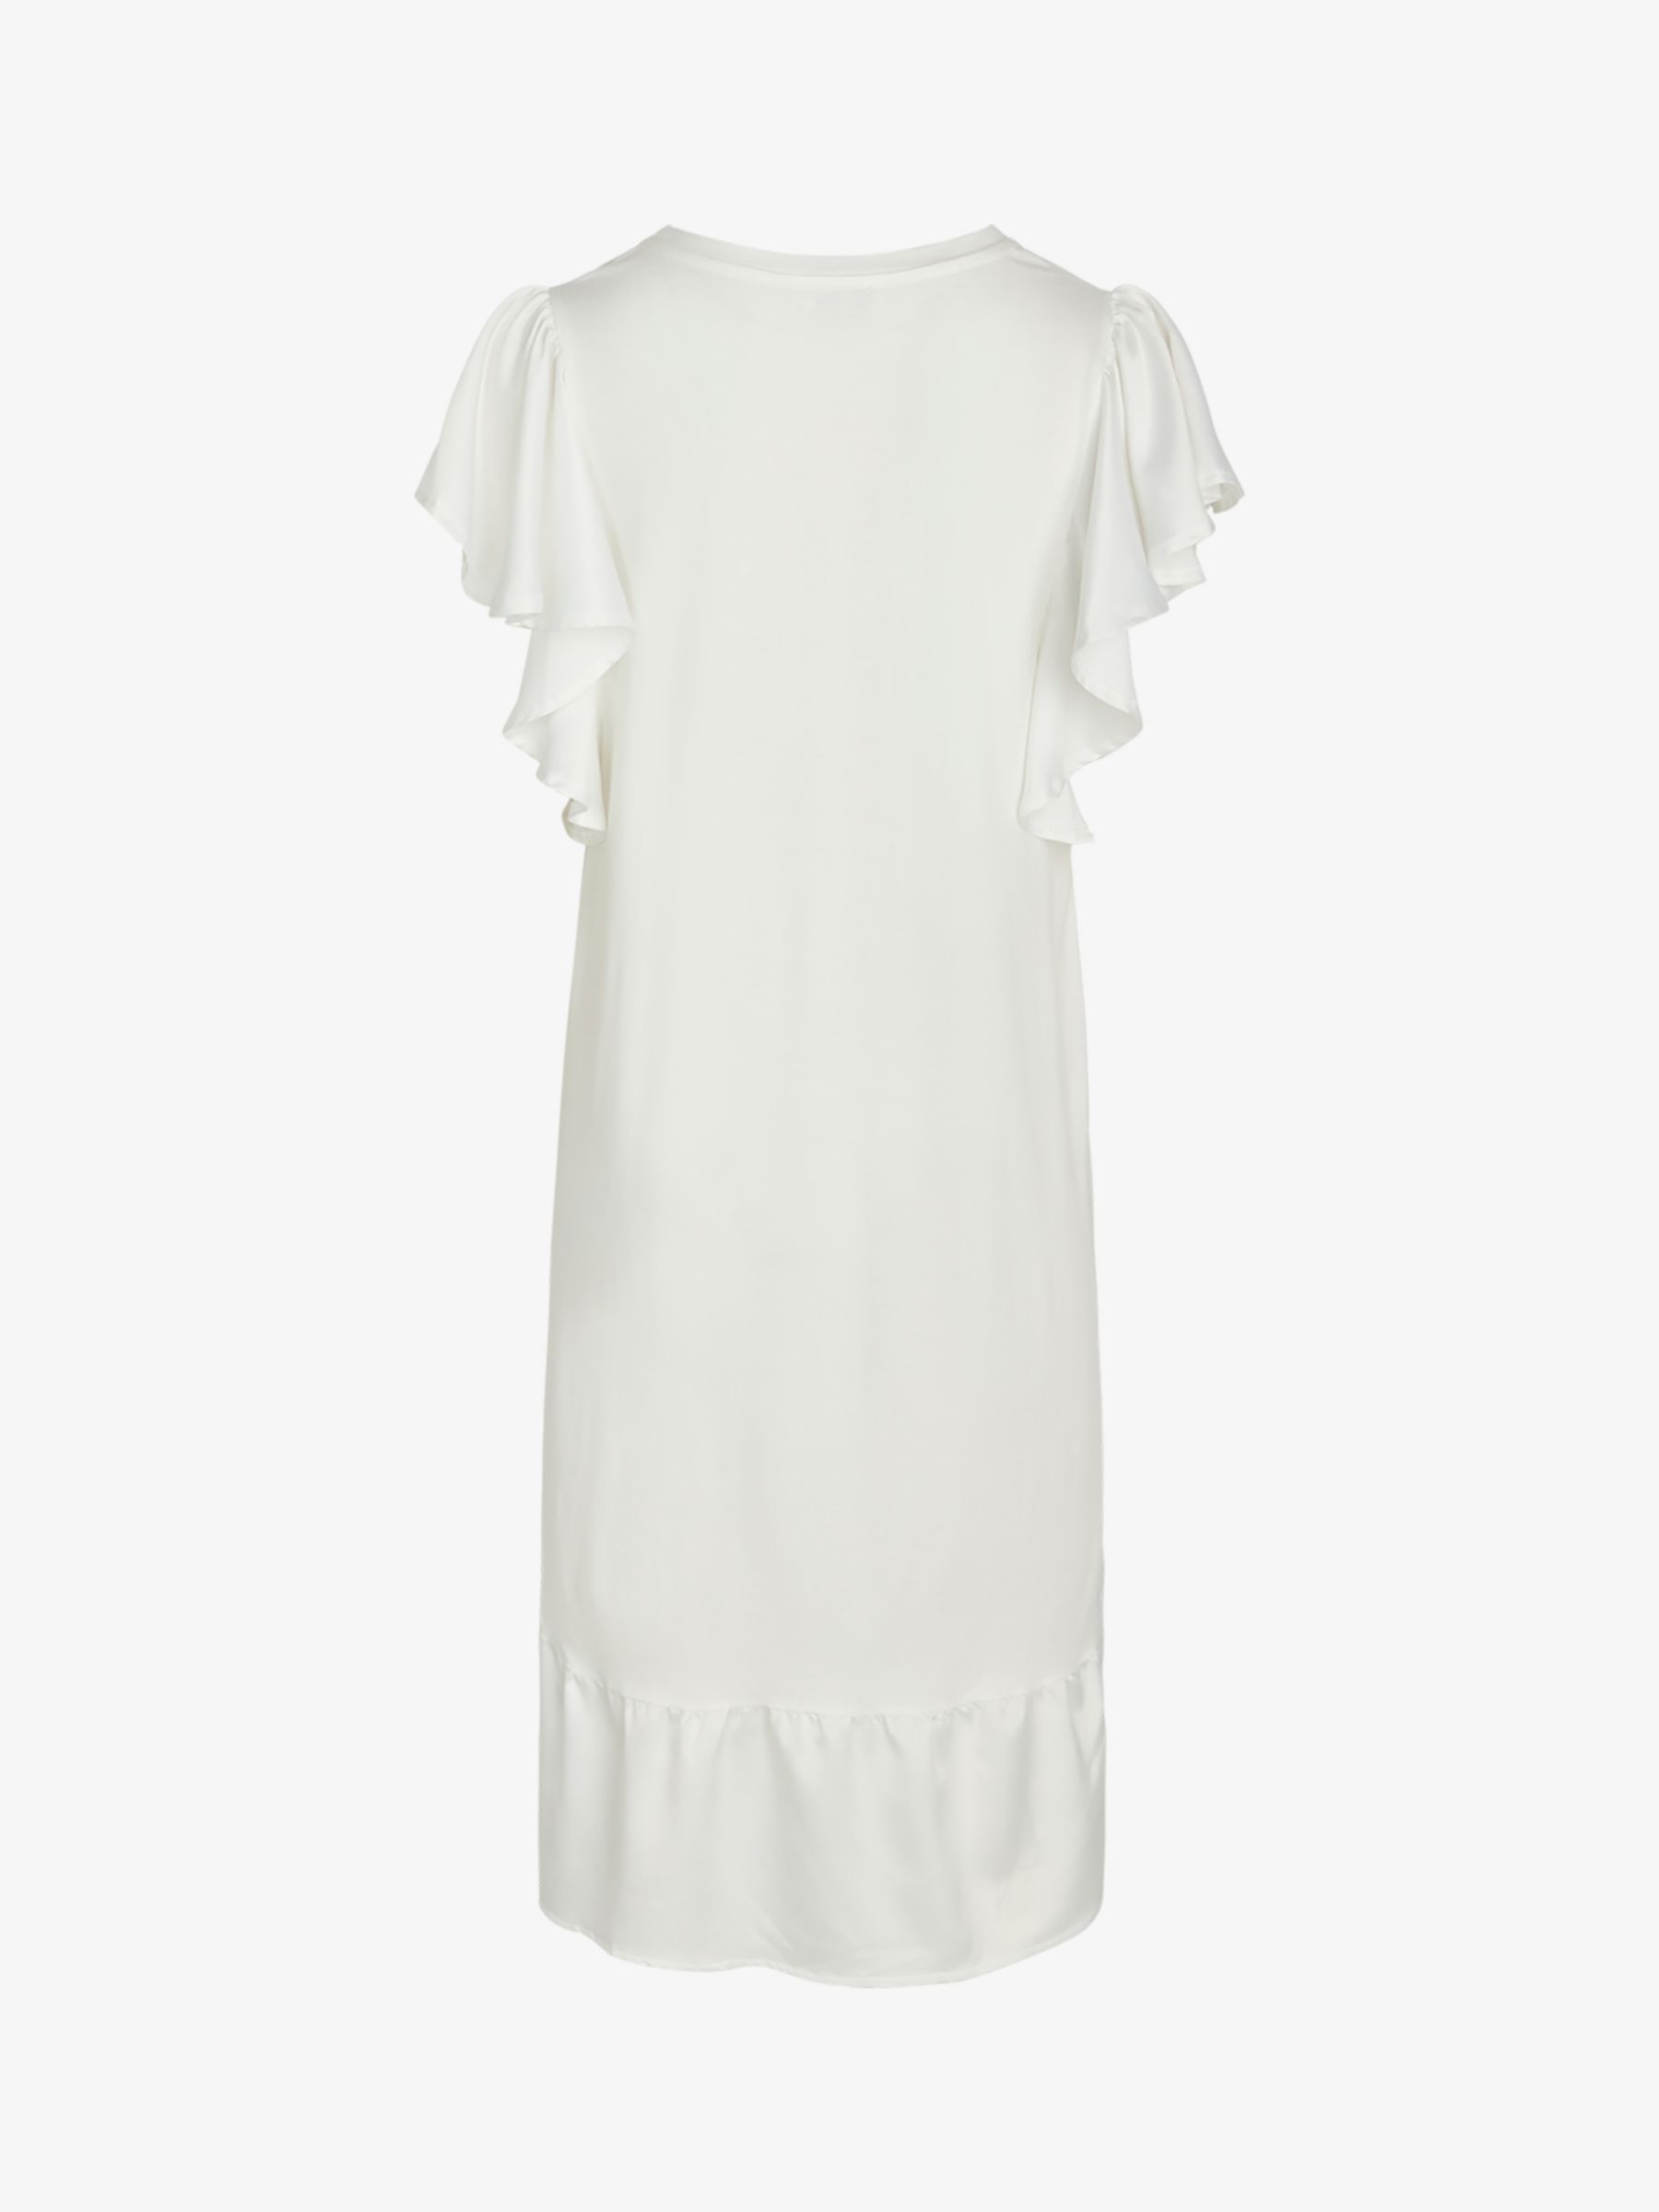 Noa Noa Katie Ruffled Raglan Sleeve Dress, White at John Lewis & Partners